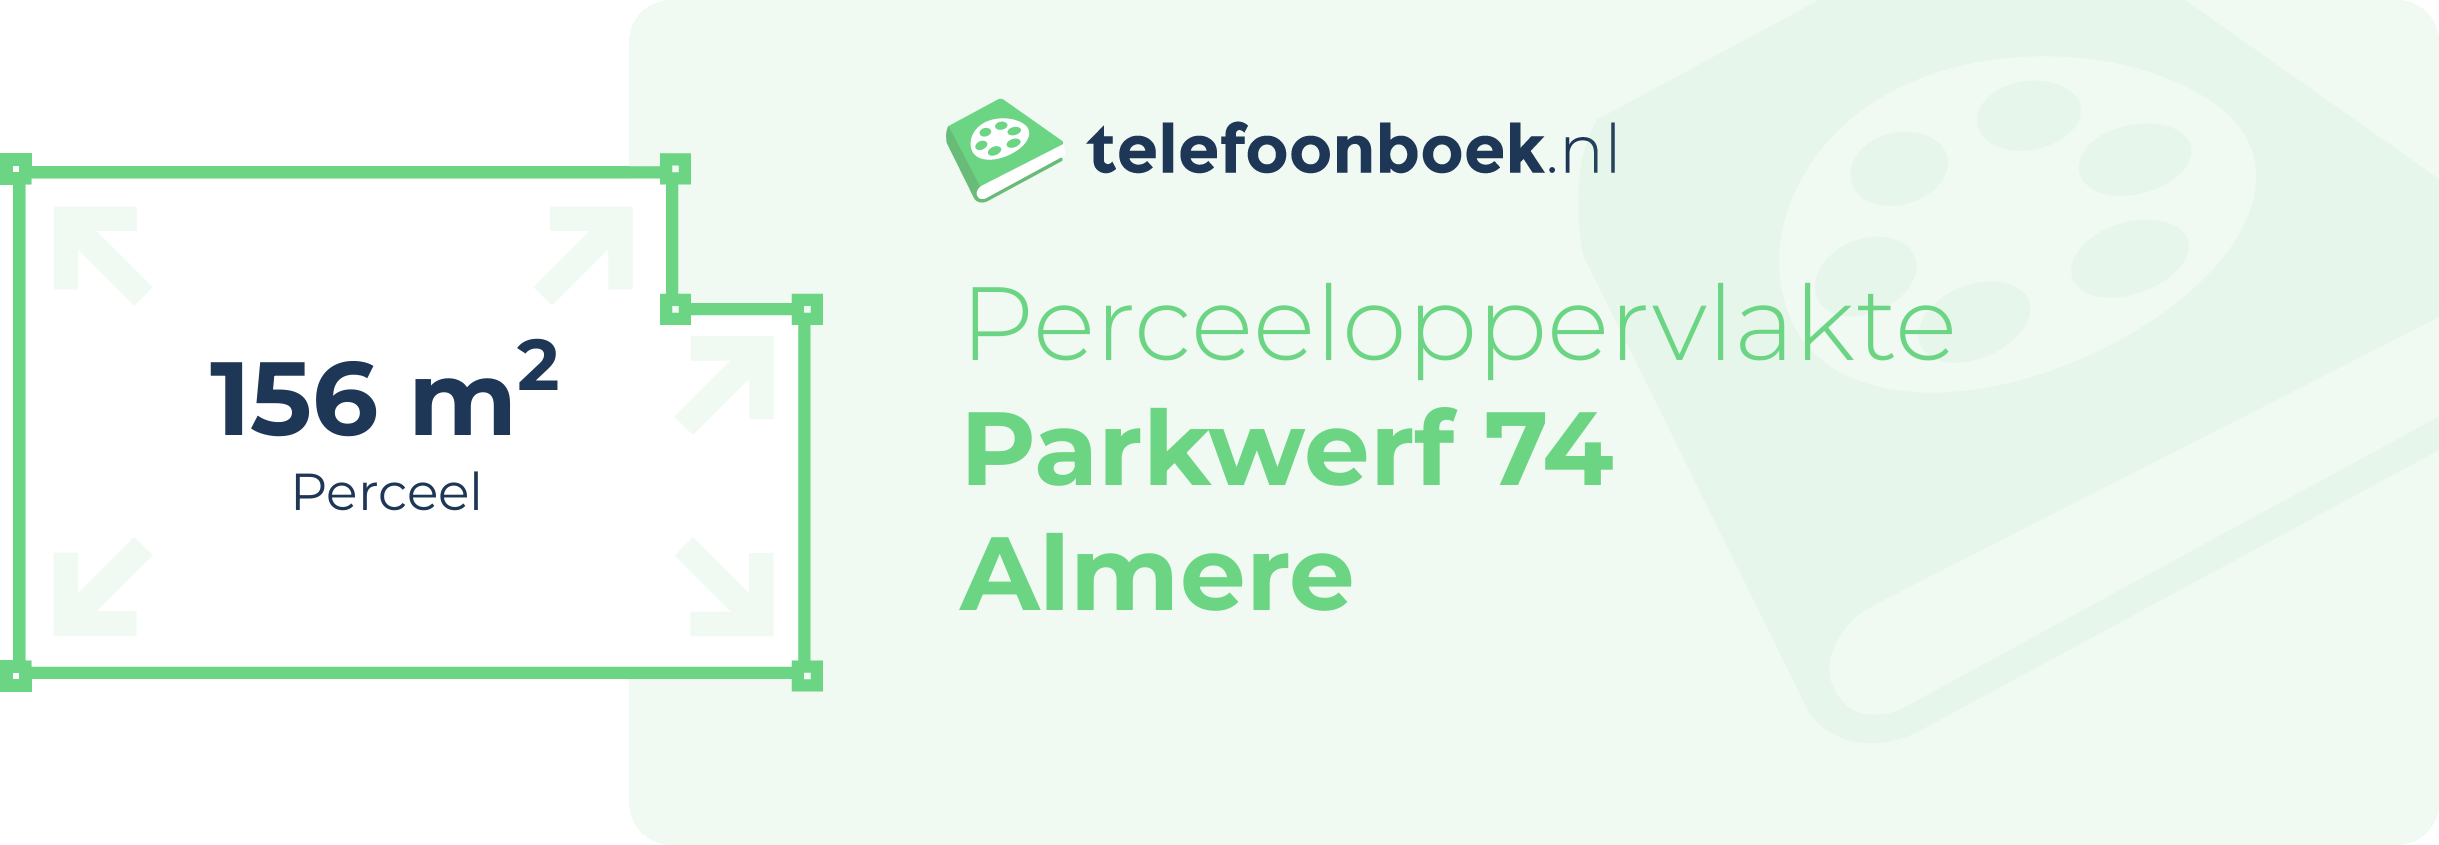 Perceeloppervlakte Parkwerf 74 Almere